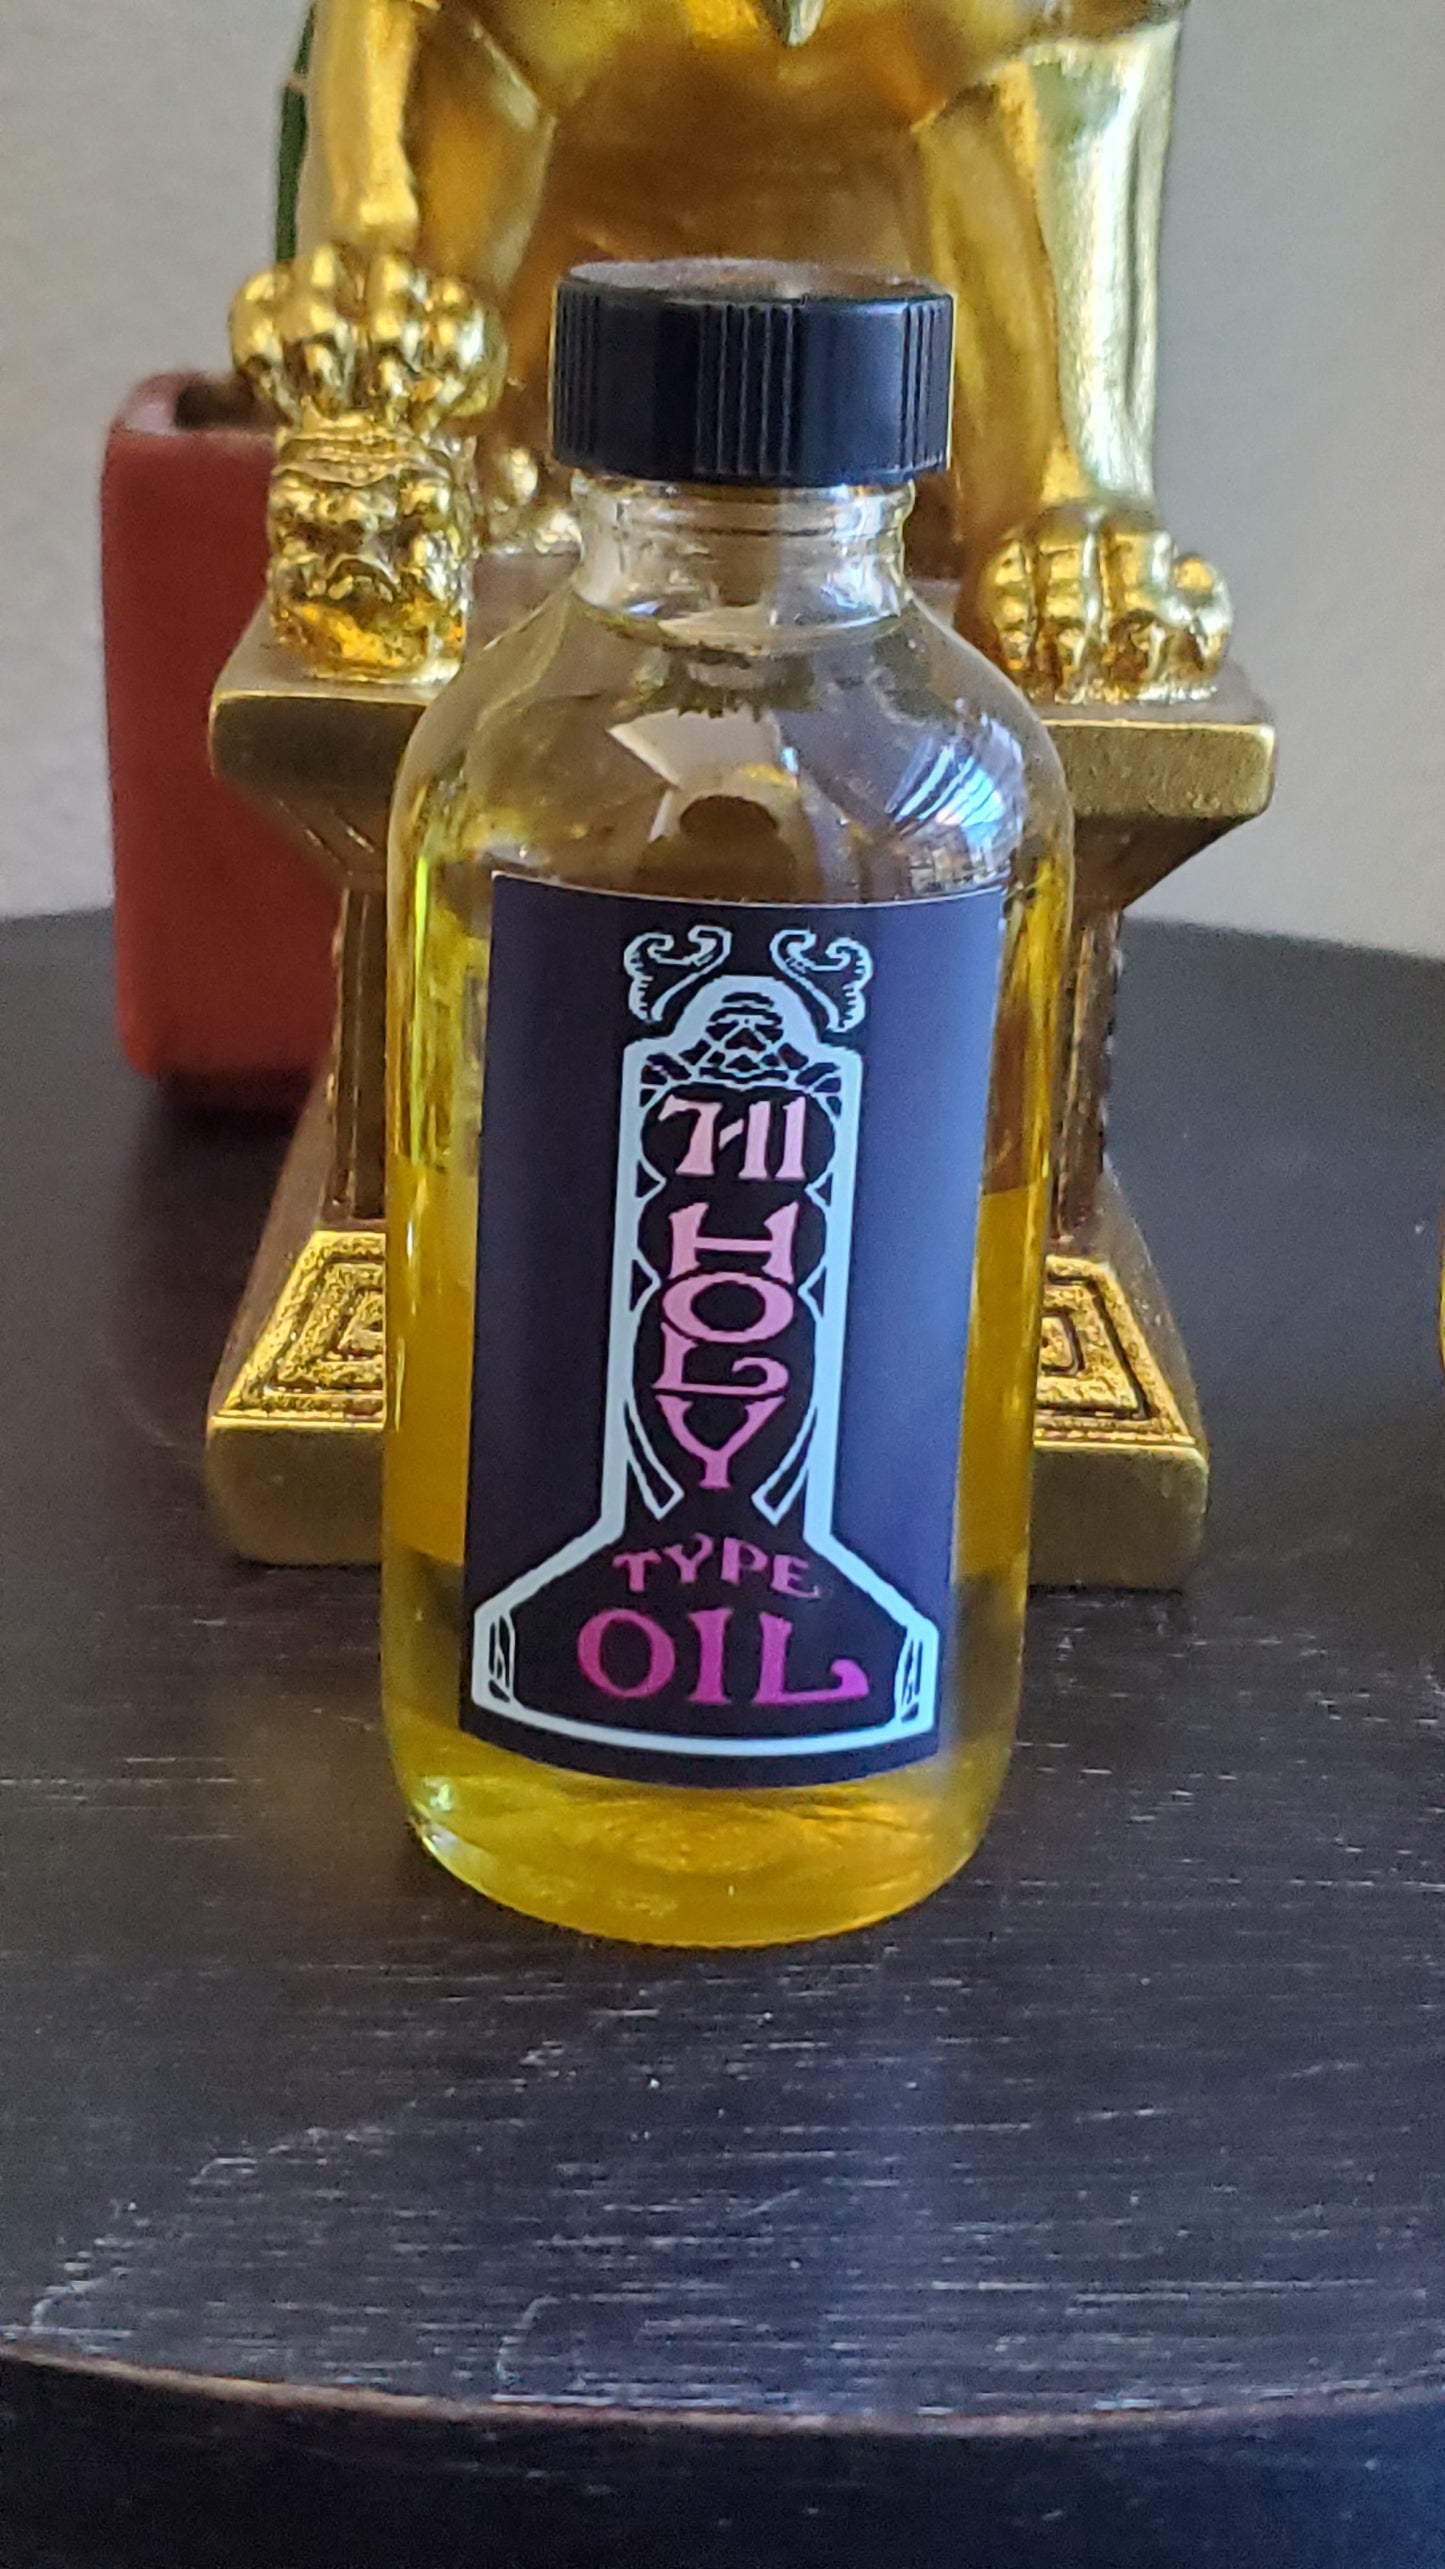 LuckyMojoCurioCo "7-11 Holy Oil" Anointing / Conjure Oil #Great Deal #LuckyMojoCurioCo #LuckyMojo #EffectiveOils #WisdomOil